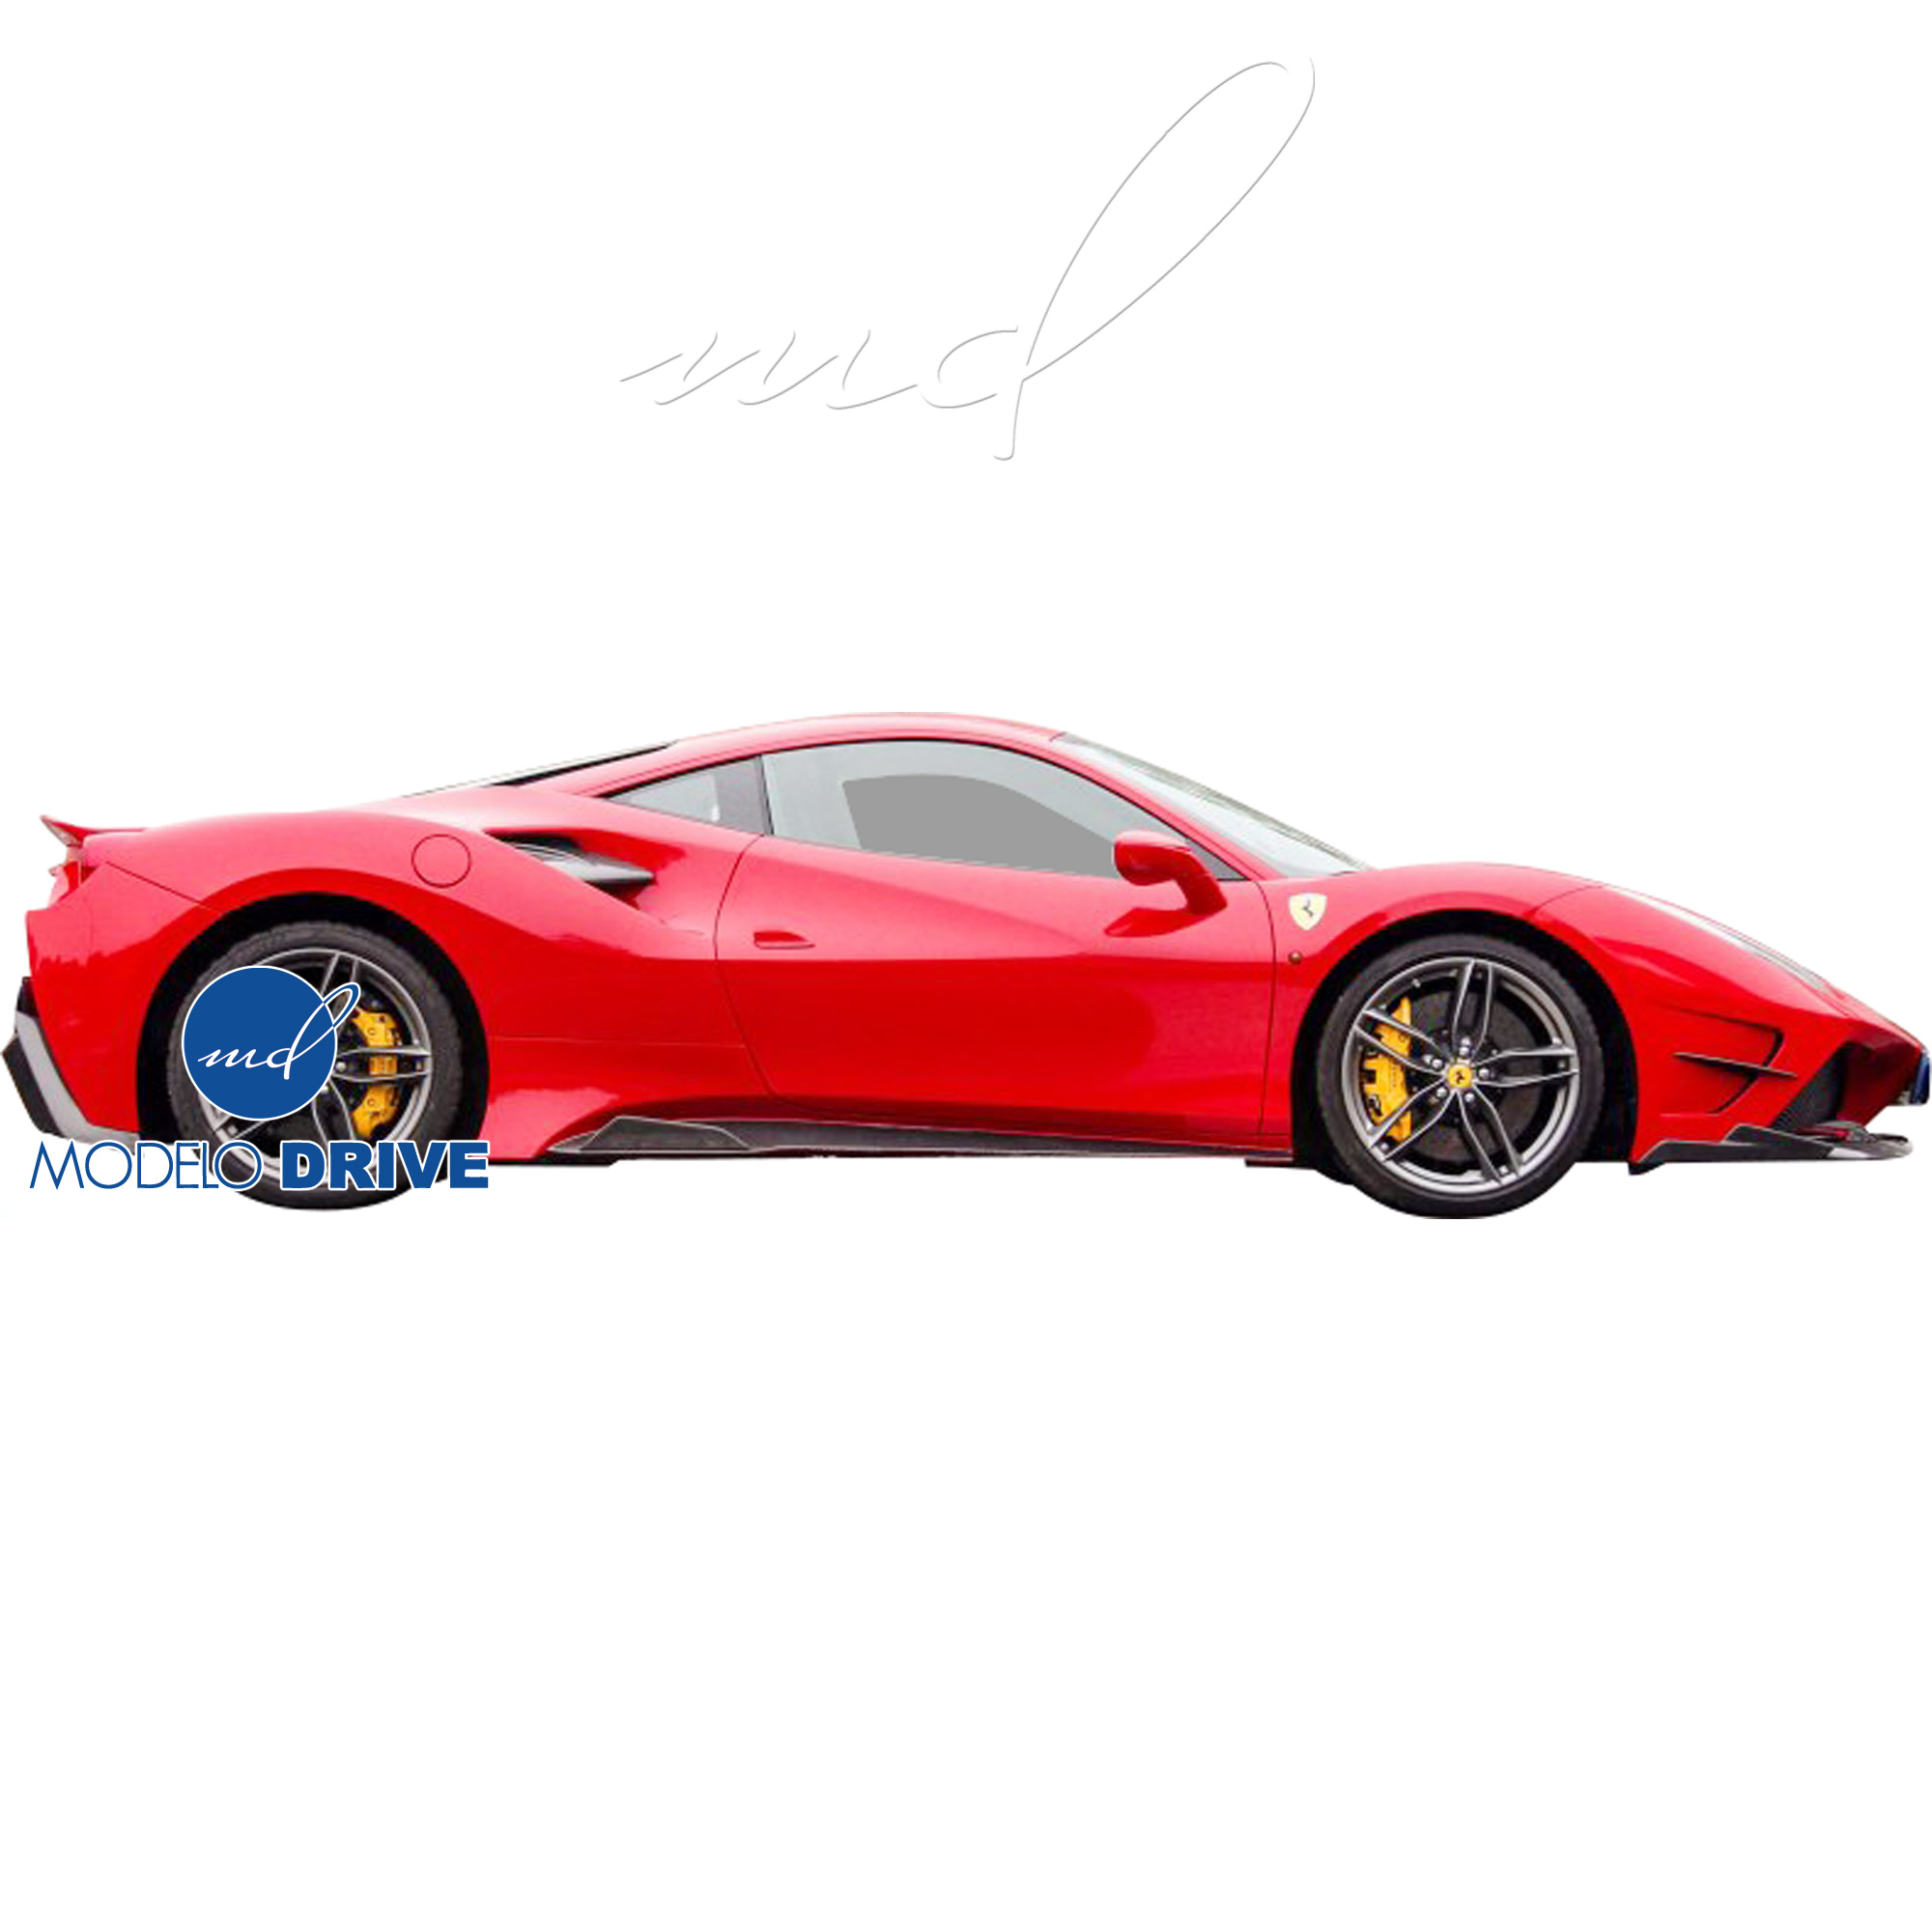 ModeloDrive Partial Carbon Fiber MDES Side Skirts > Ferrari 488 GTB F142M 2016-2019 - Image 8